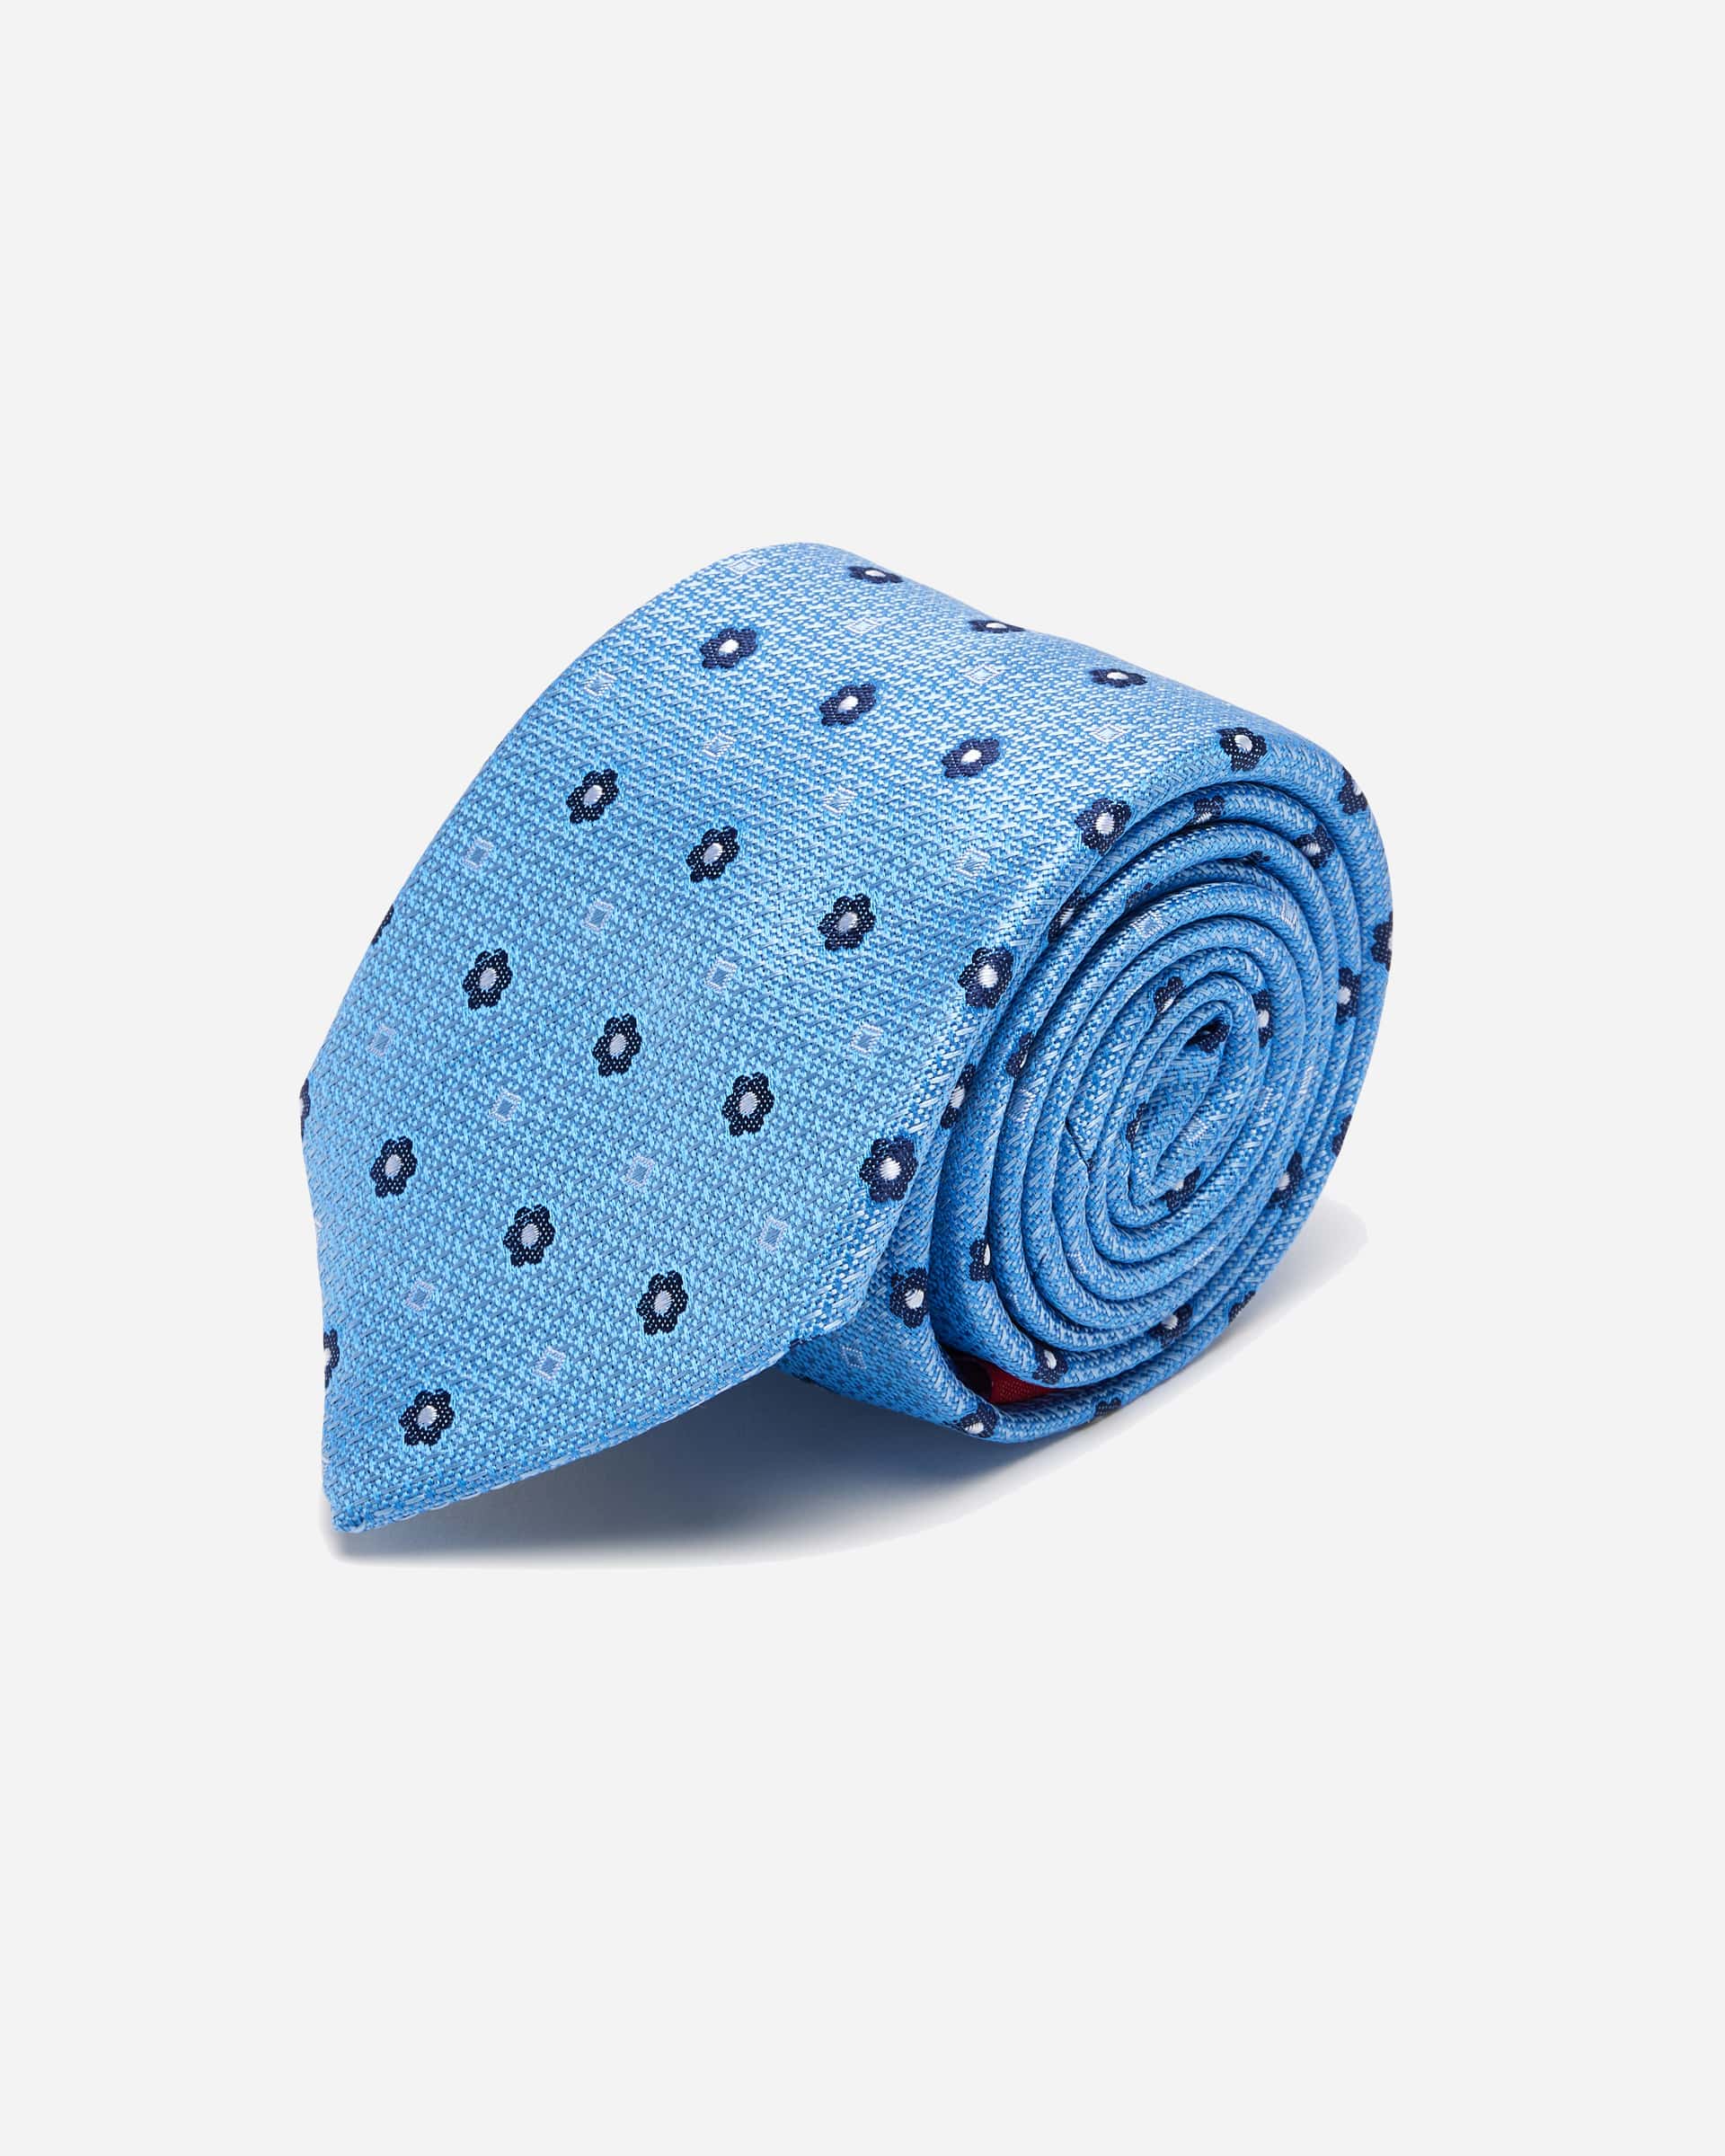 Blue Floral Motif Silk Tie - Men's Ties at Menzclub